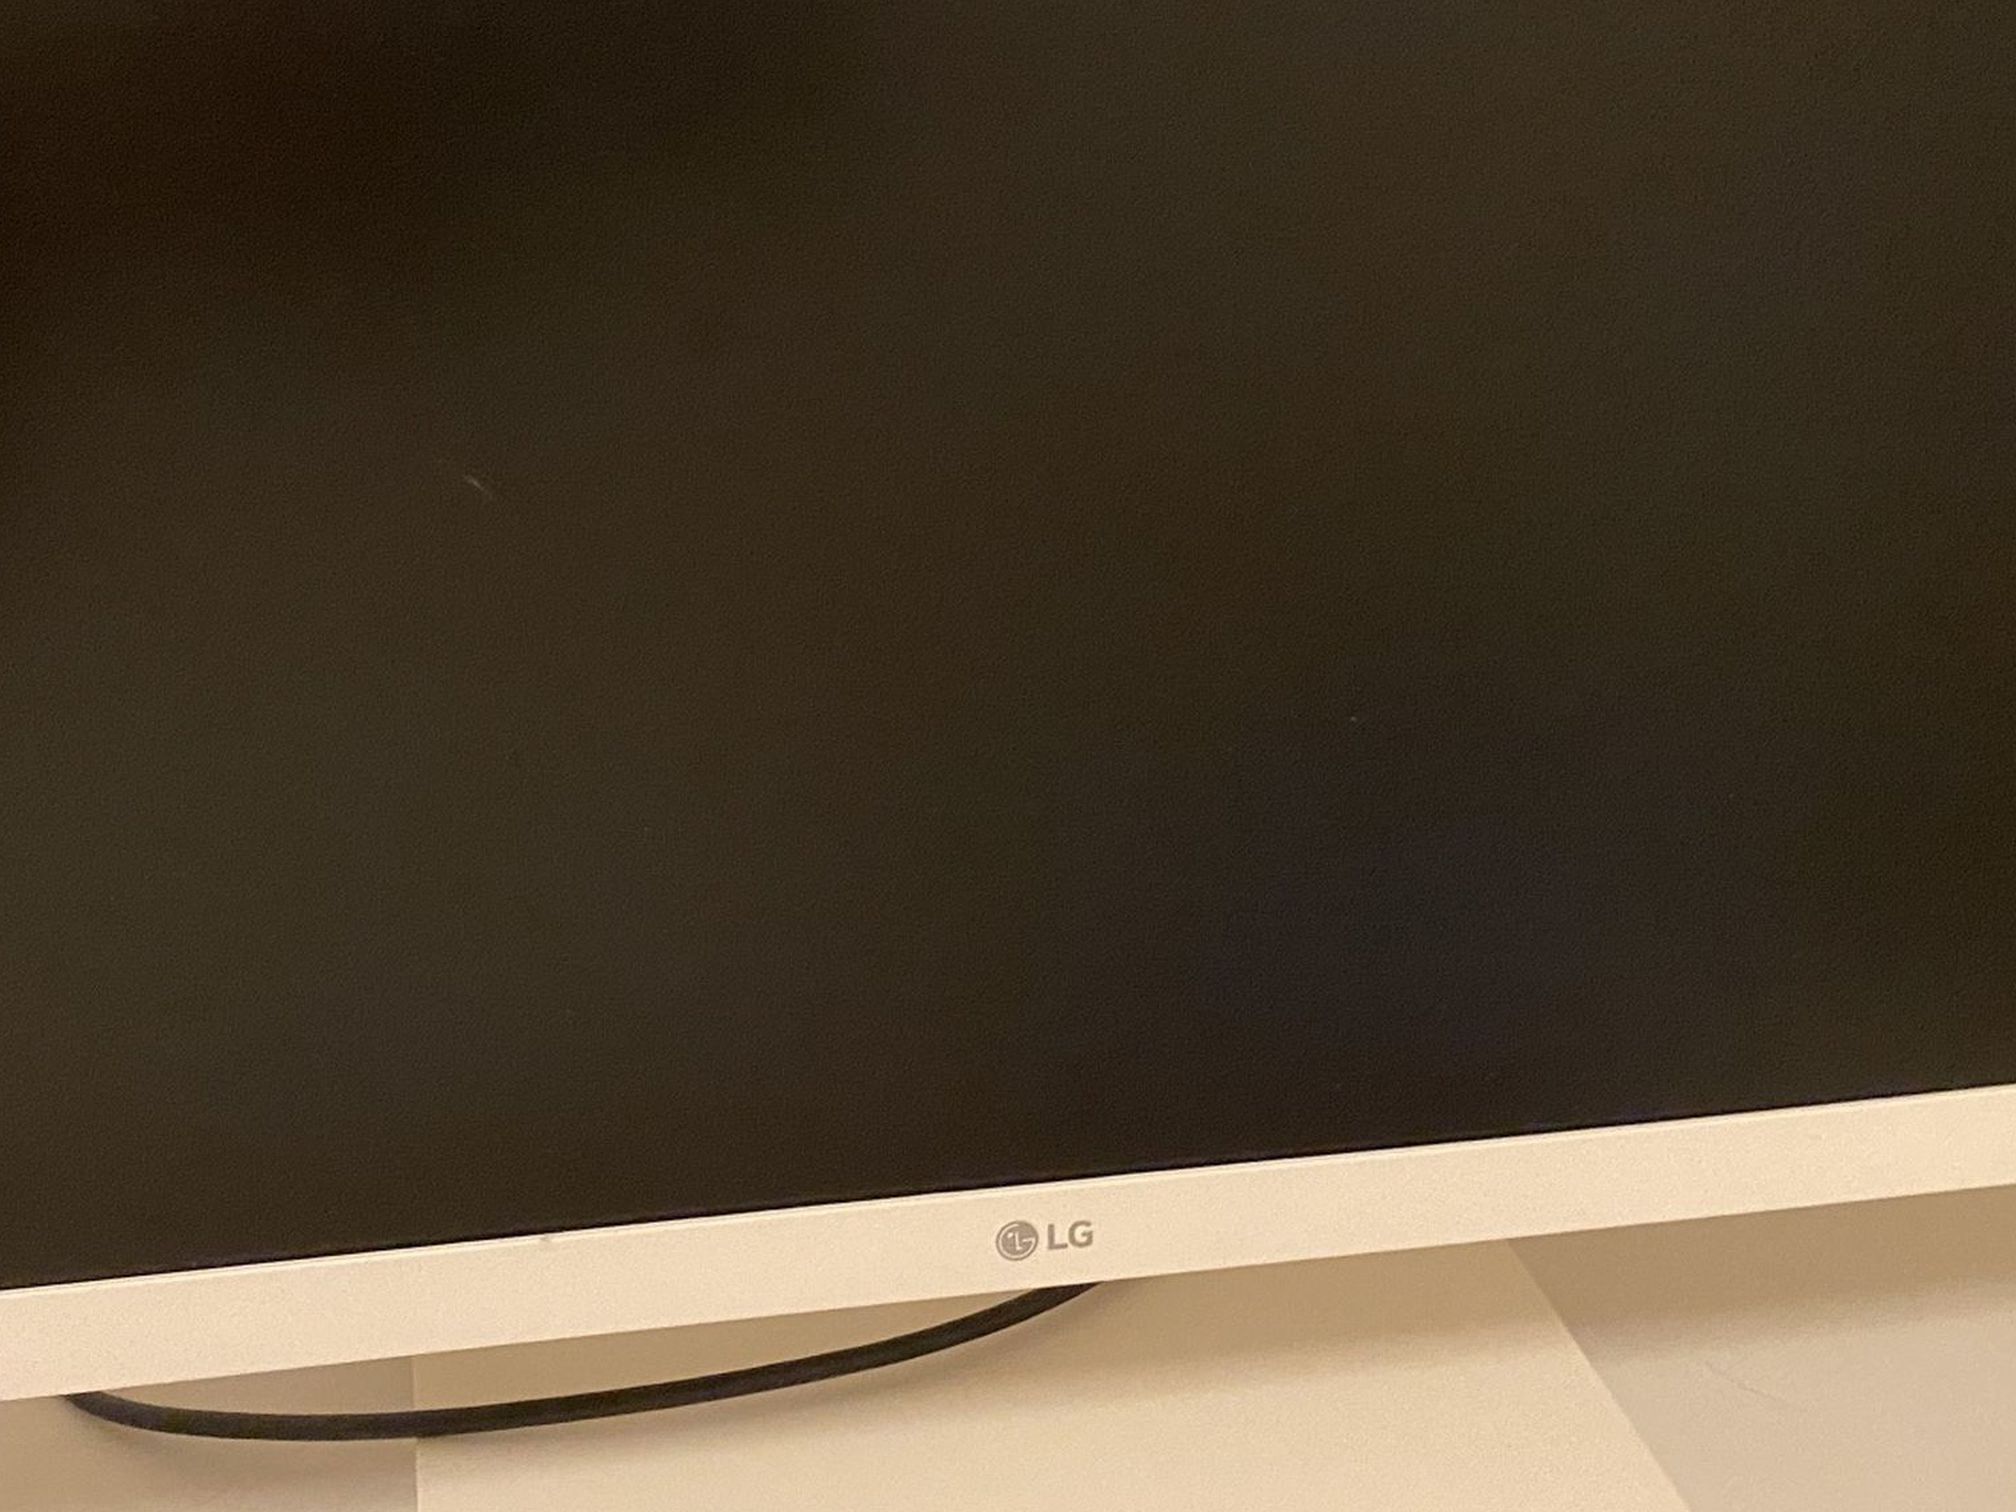 LG White Computer Monitor